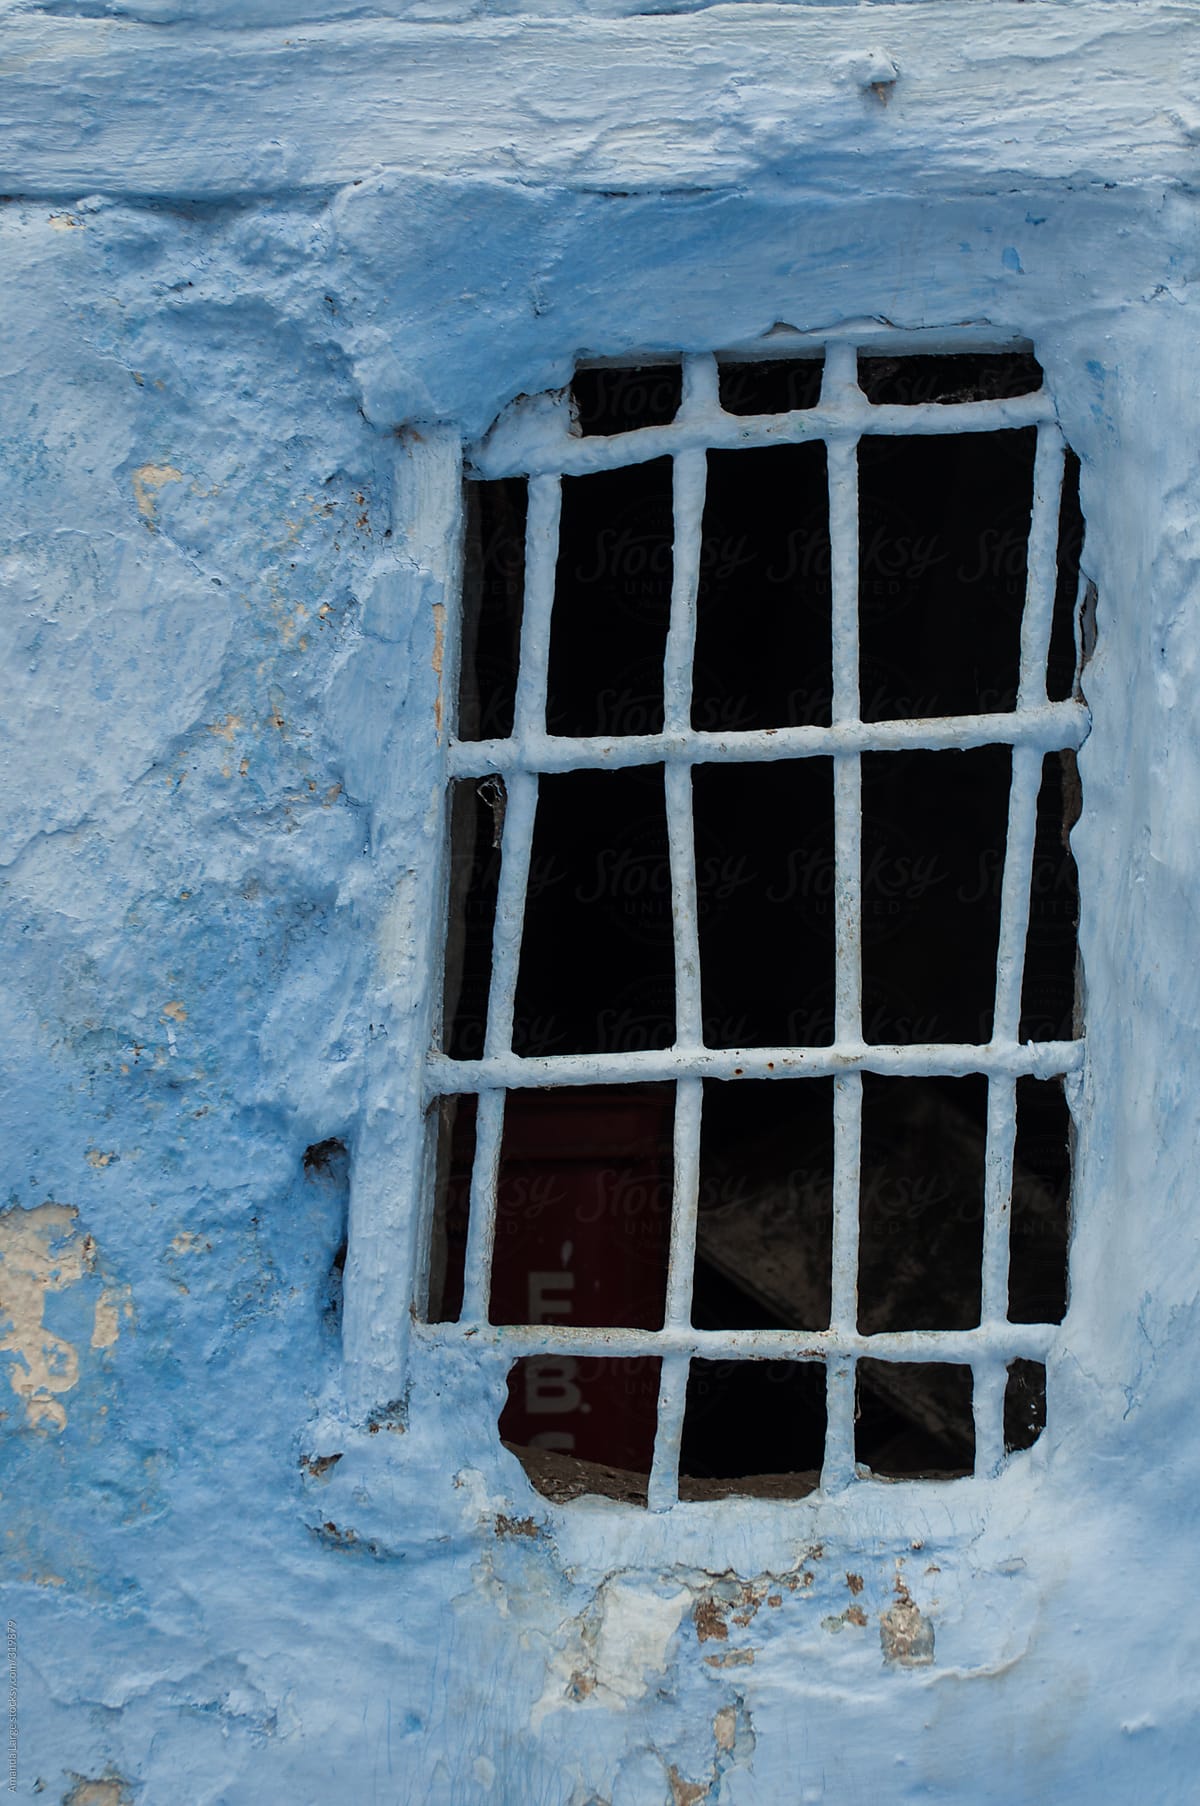 Chefchaouen blue city: barred window detail